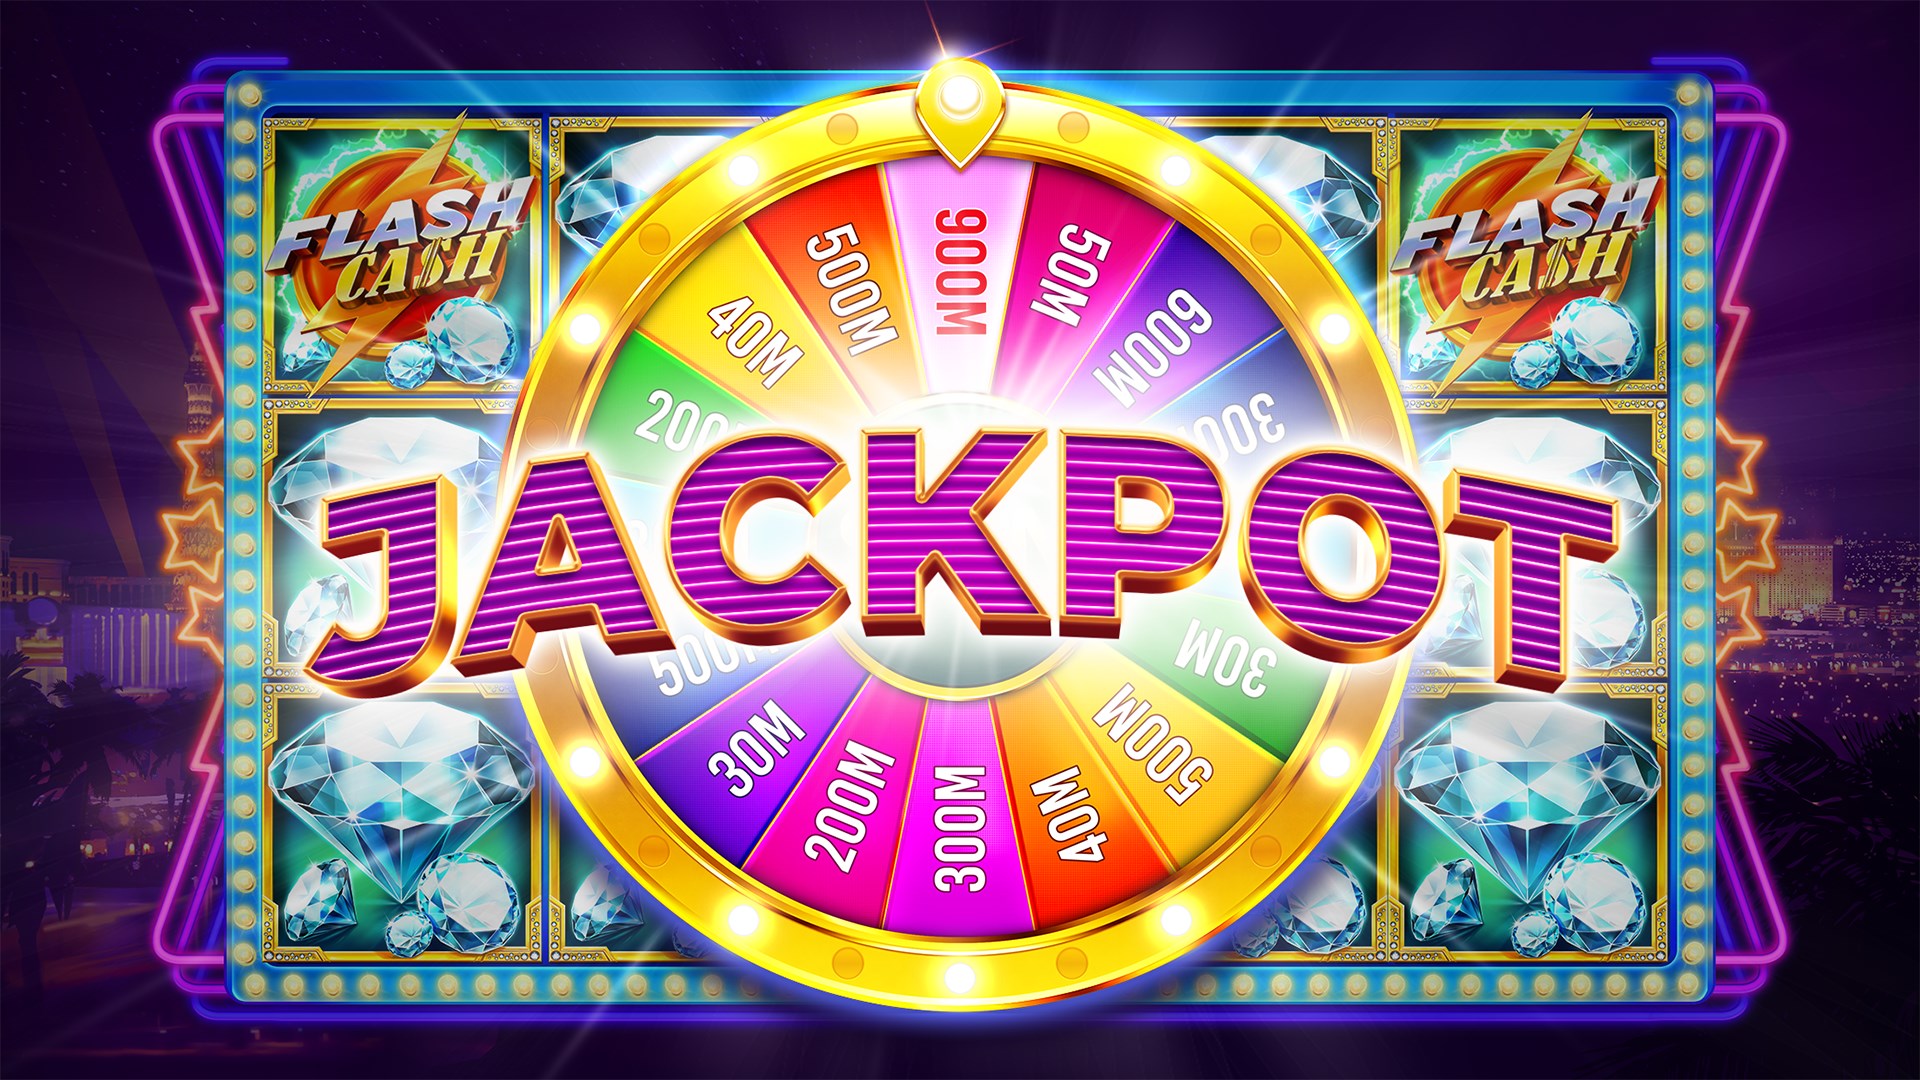 Permainan Judi Slot Online Jackpot Terbesar Terlengkap post thumbnail image